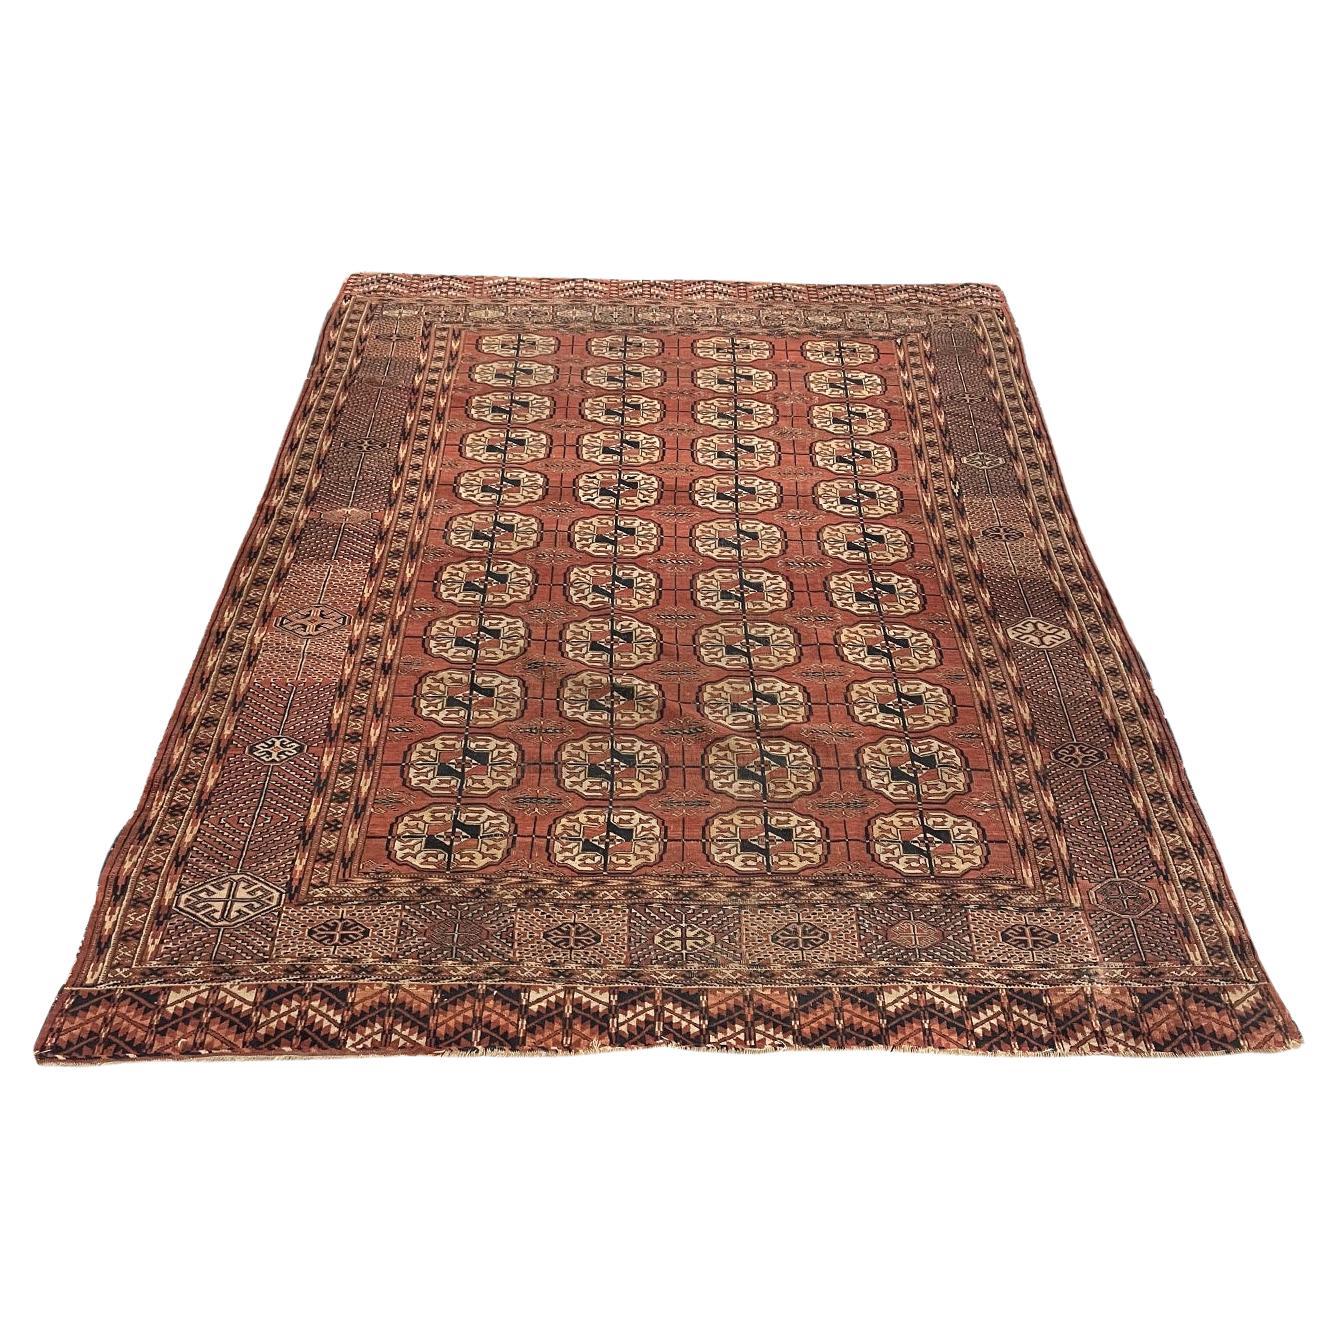 What is a Peshawar Ziegler rug?